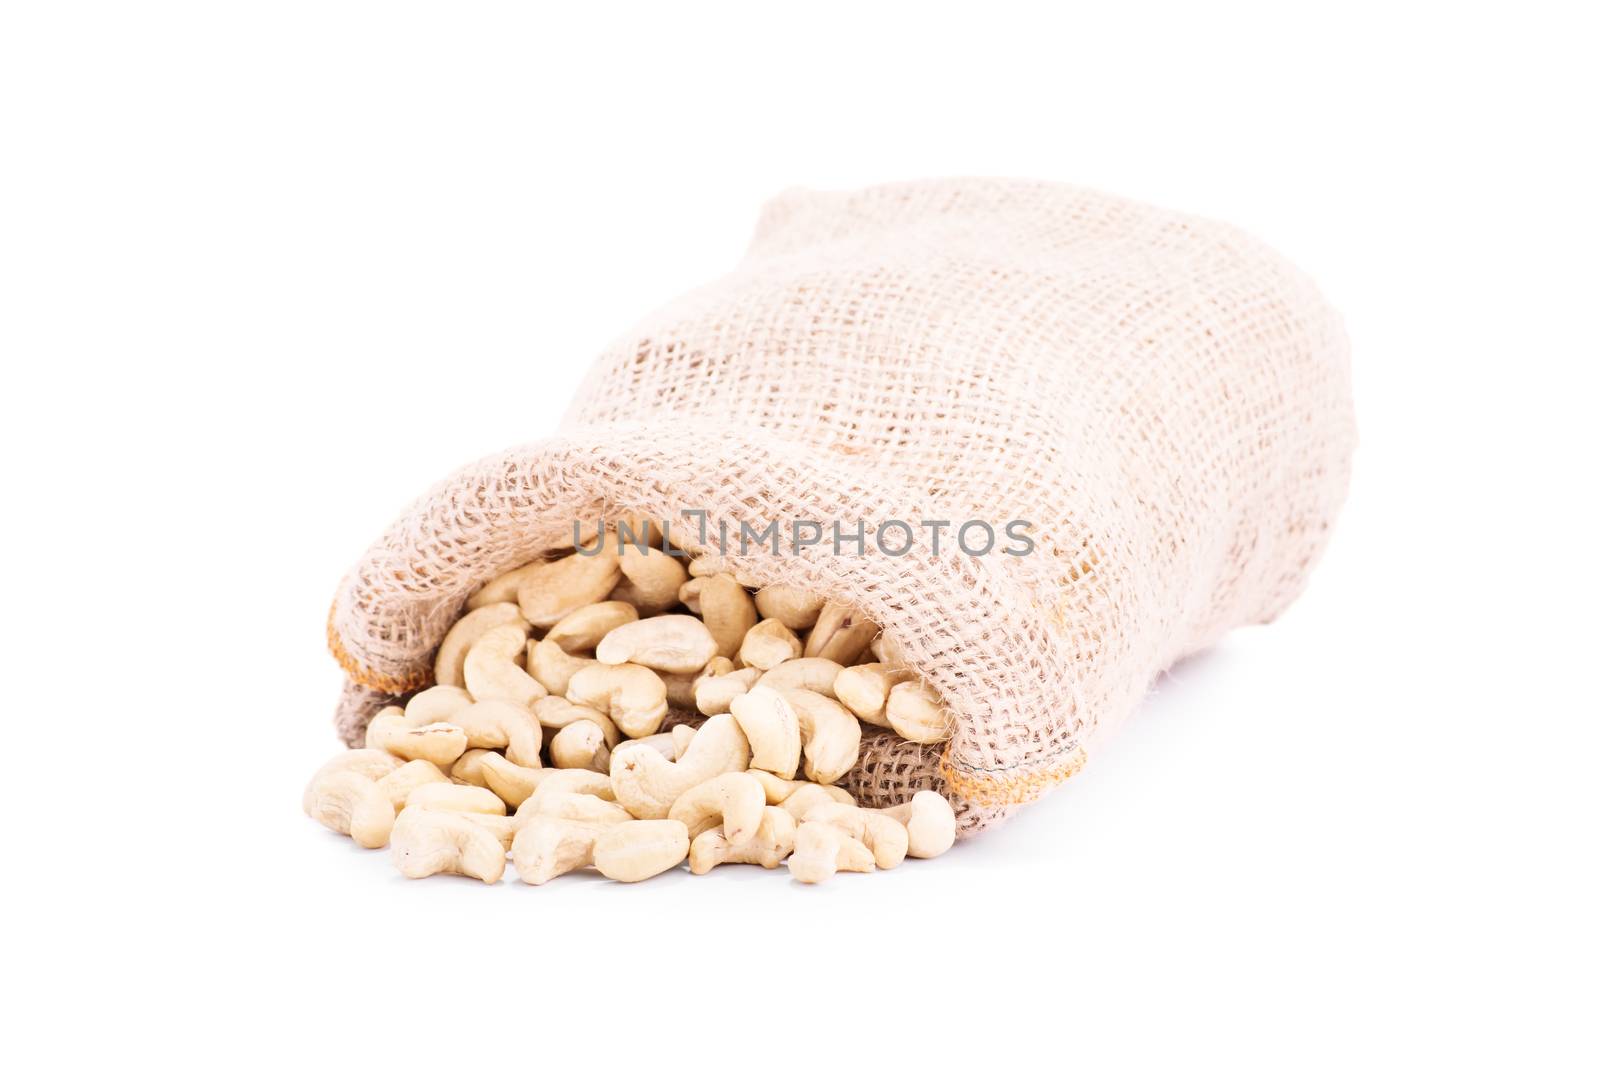 Spilled sack of cashews by Mendelex